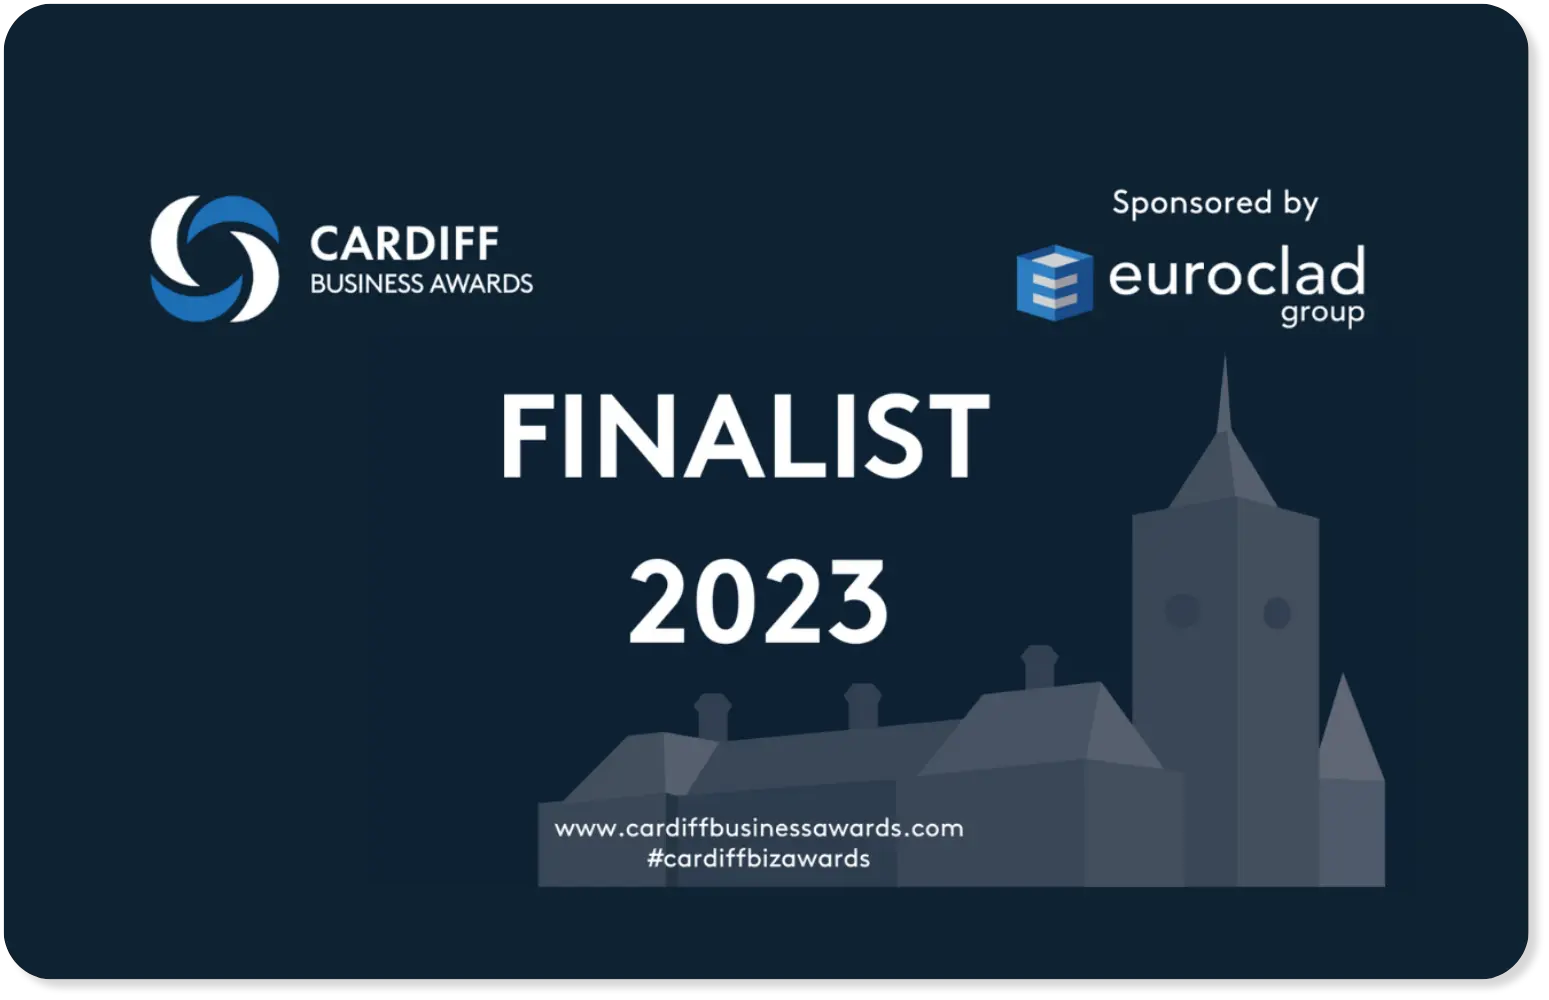 Cardiff Business Awards 2023